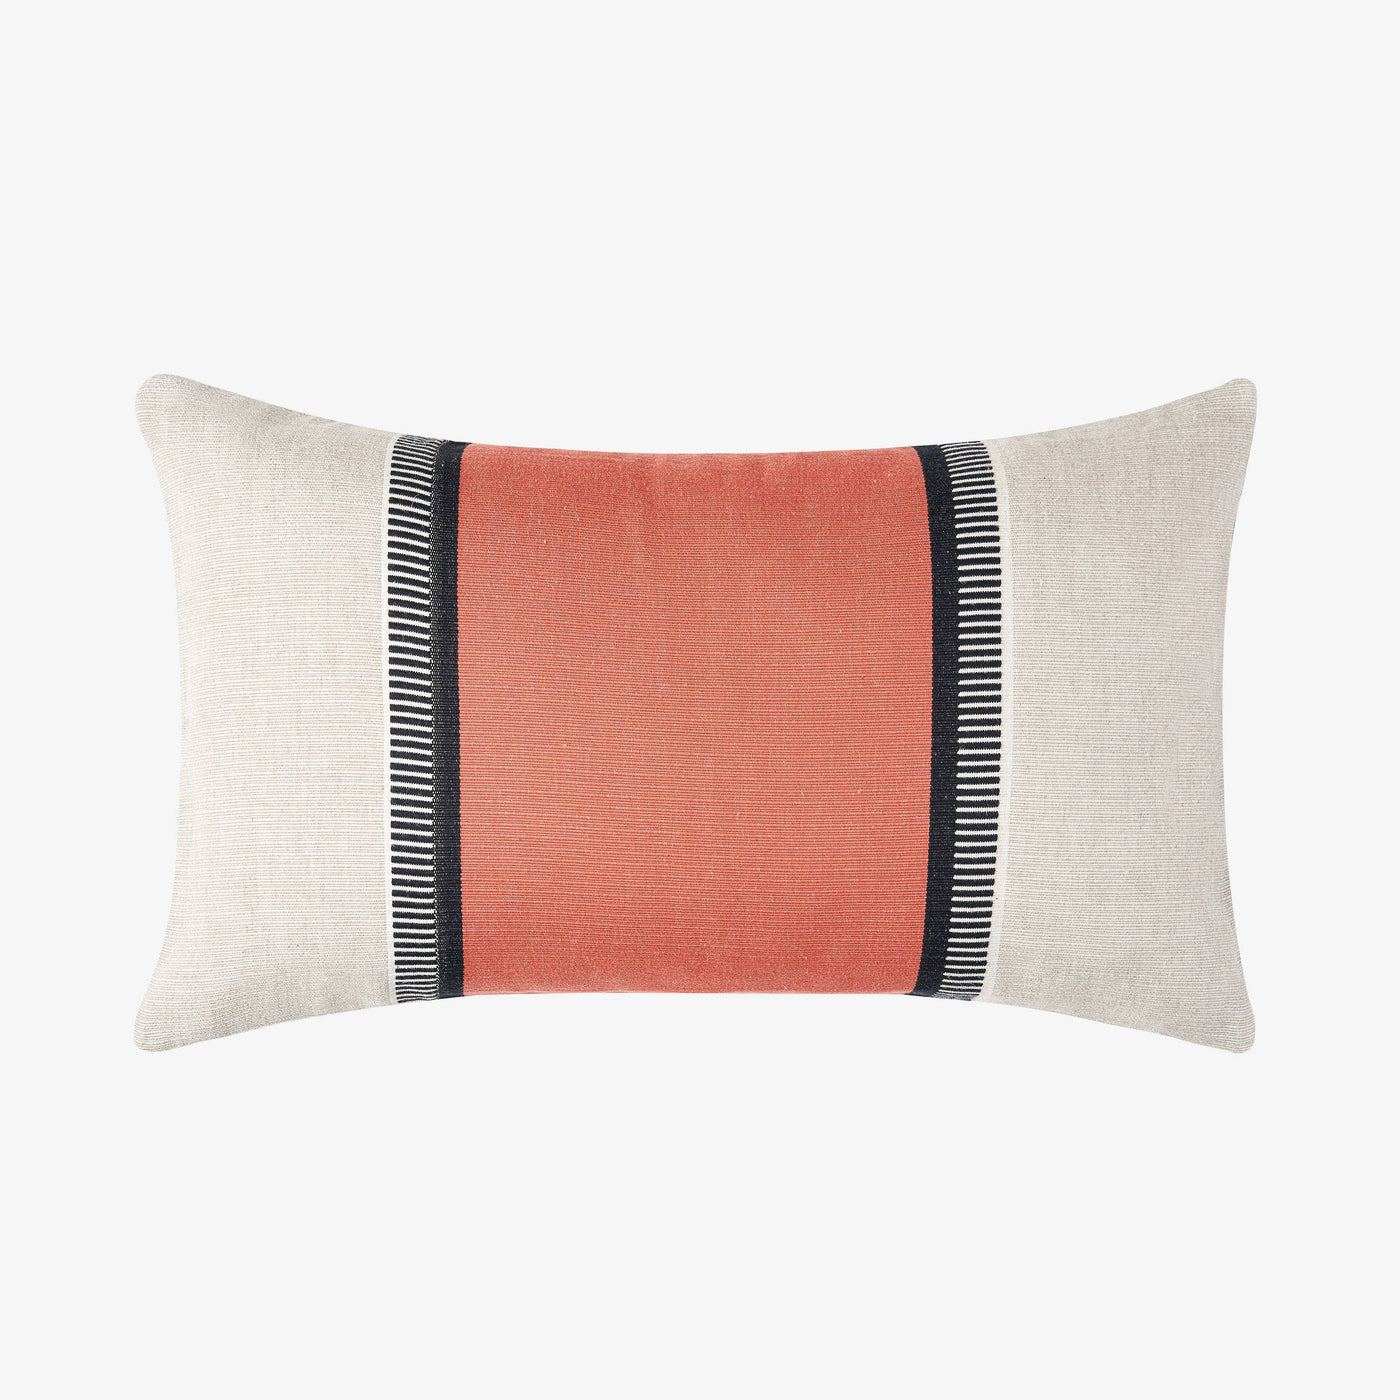 Dumnoni Cushion Cover, Red - Beige, 35x55cm 1